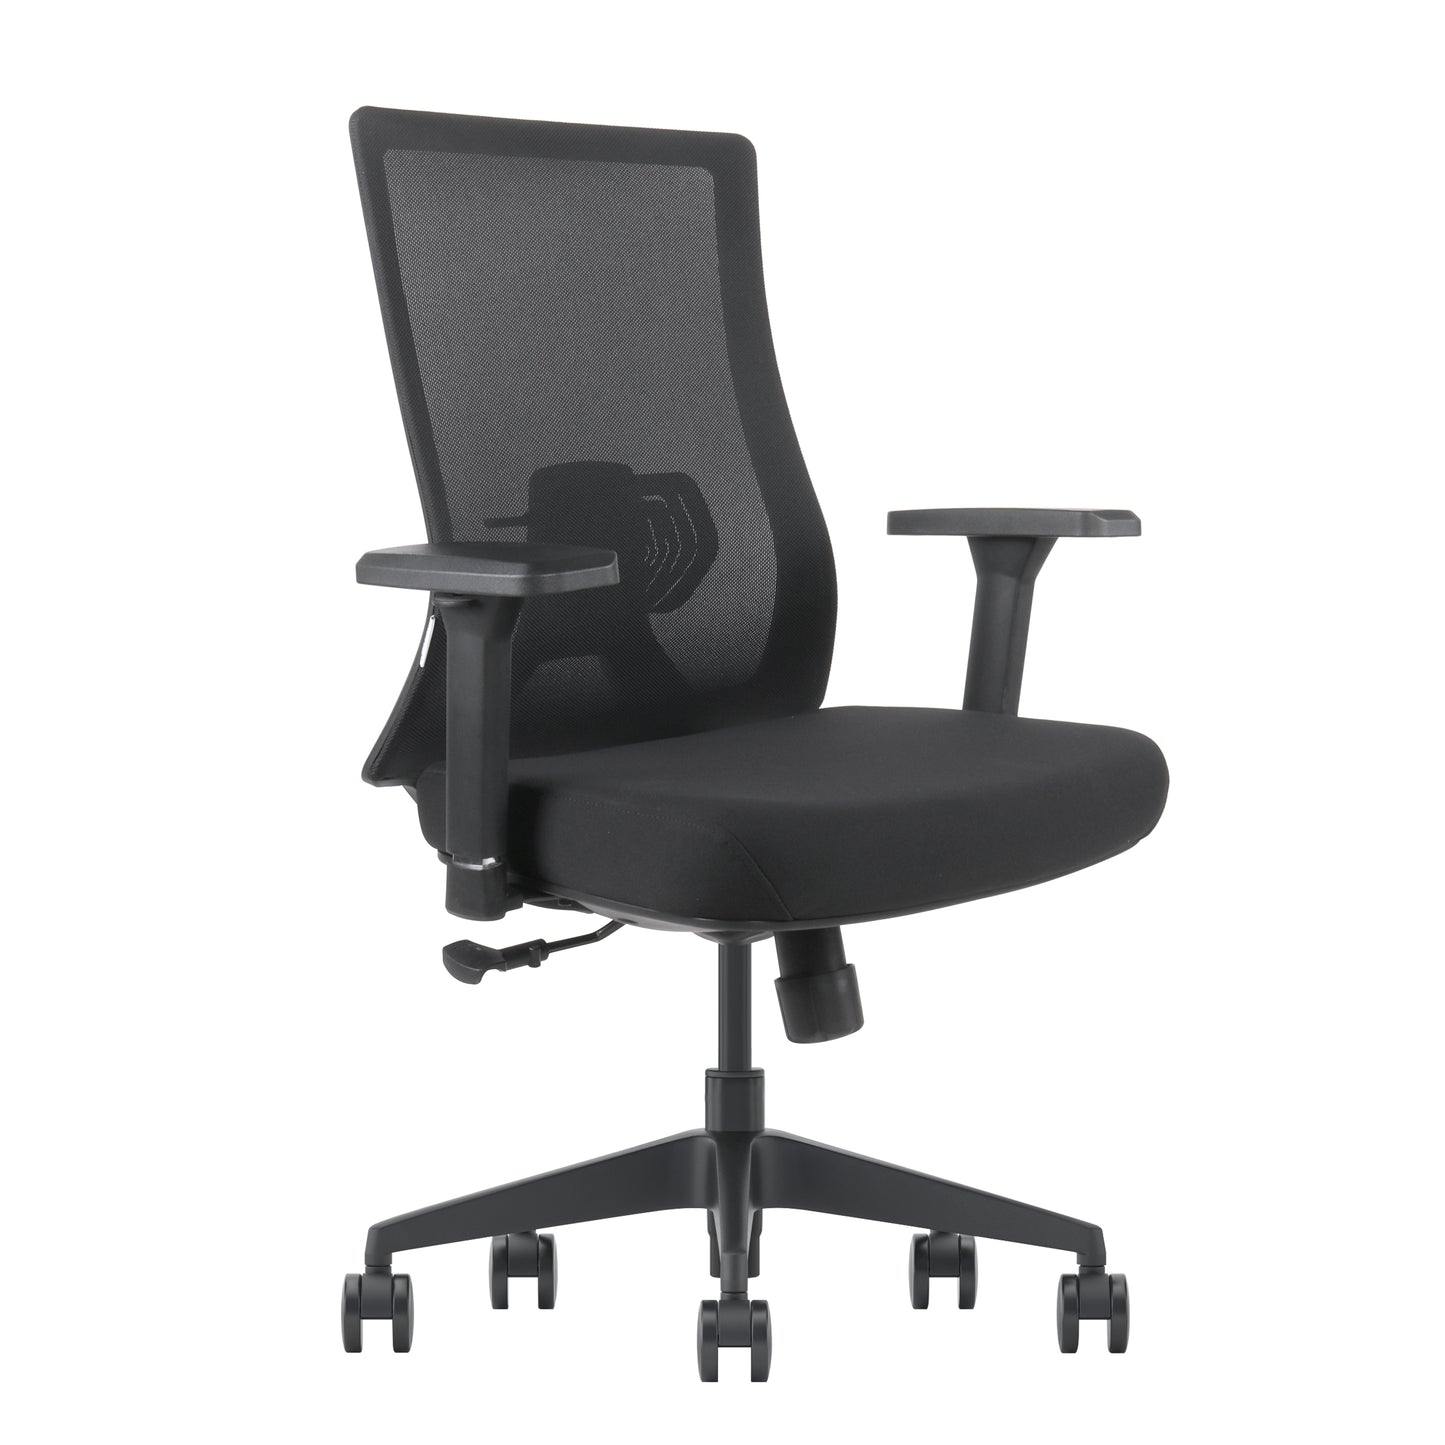 Stane Pro ergonomische bureaustoel - test-product-media-liquid1